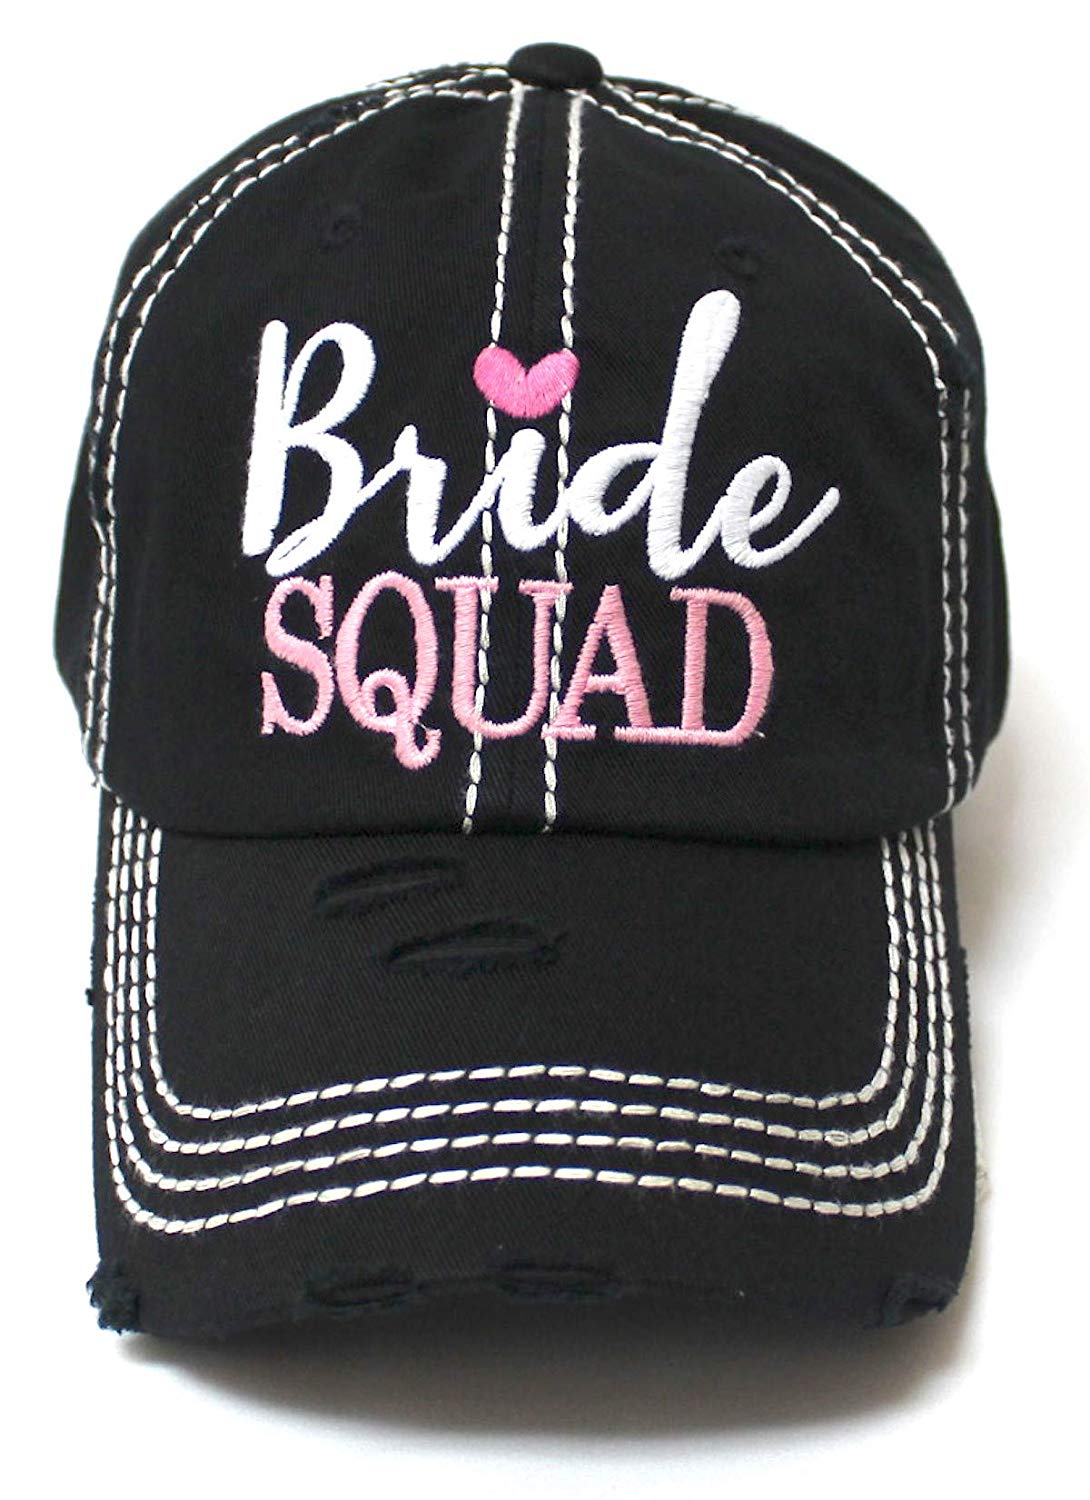 CAPS 'N VINTAGE Bridal Accessory Gift, Bride Squad Monogram One-Size Ballcap, Black - Caps 'N Vintage 